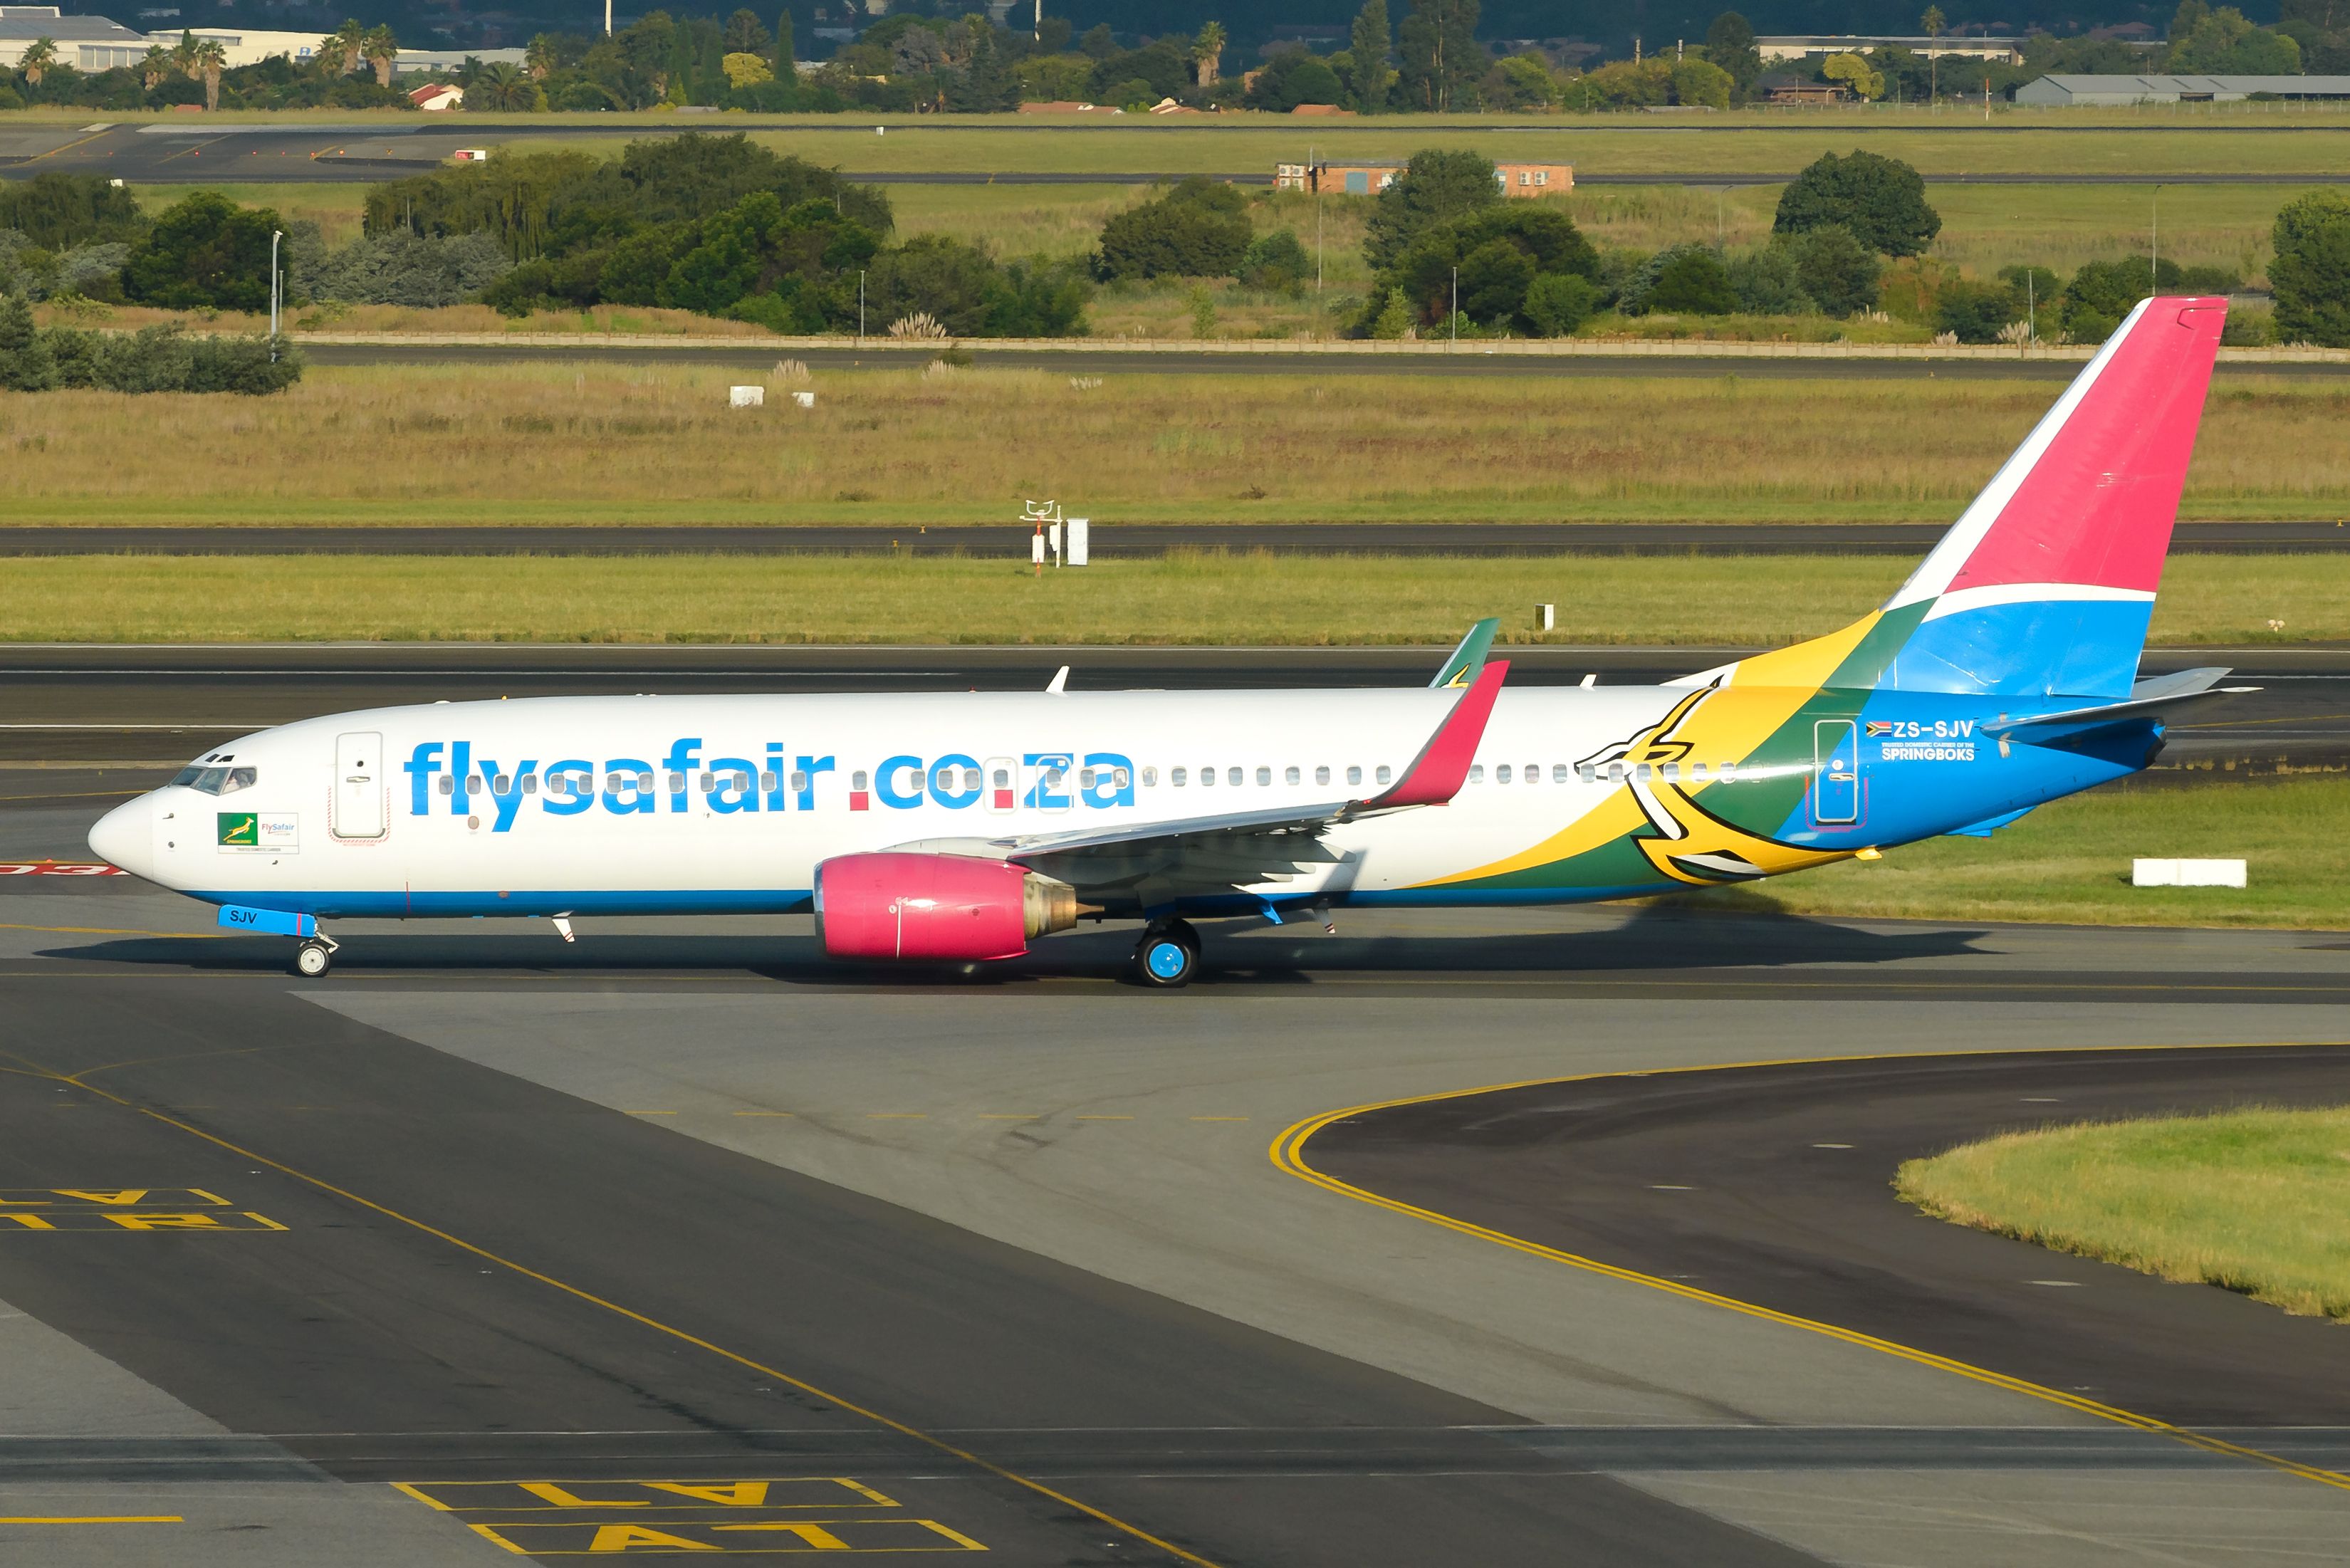 FlySafair Boeing 737 with Springboks livery